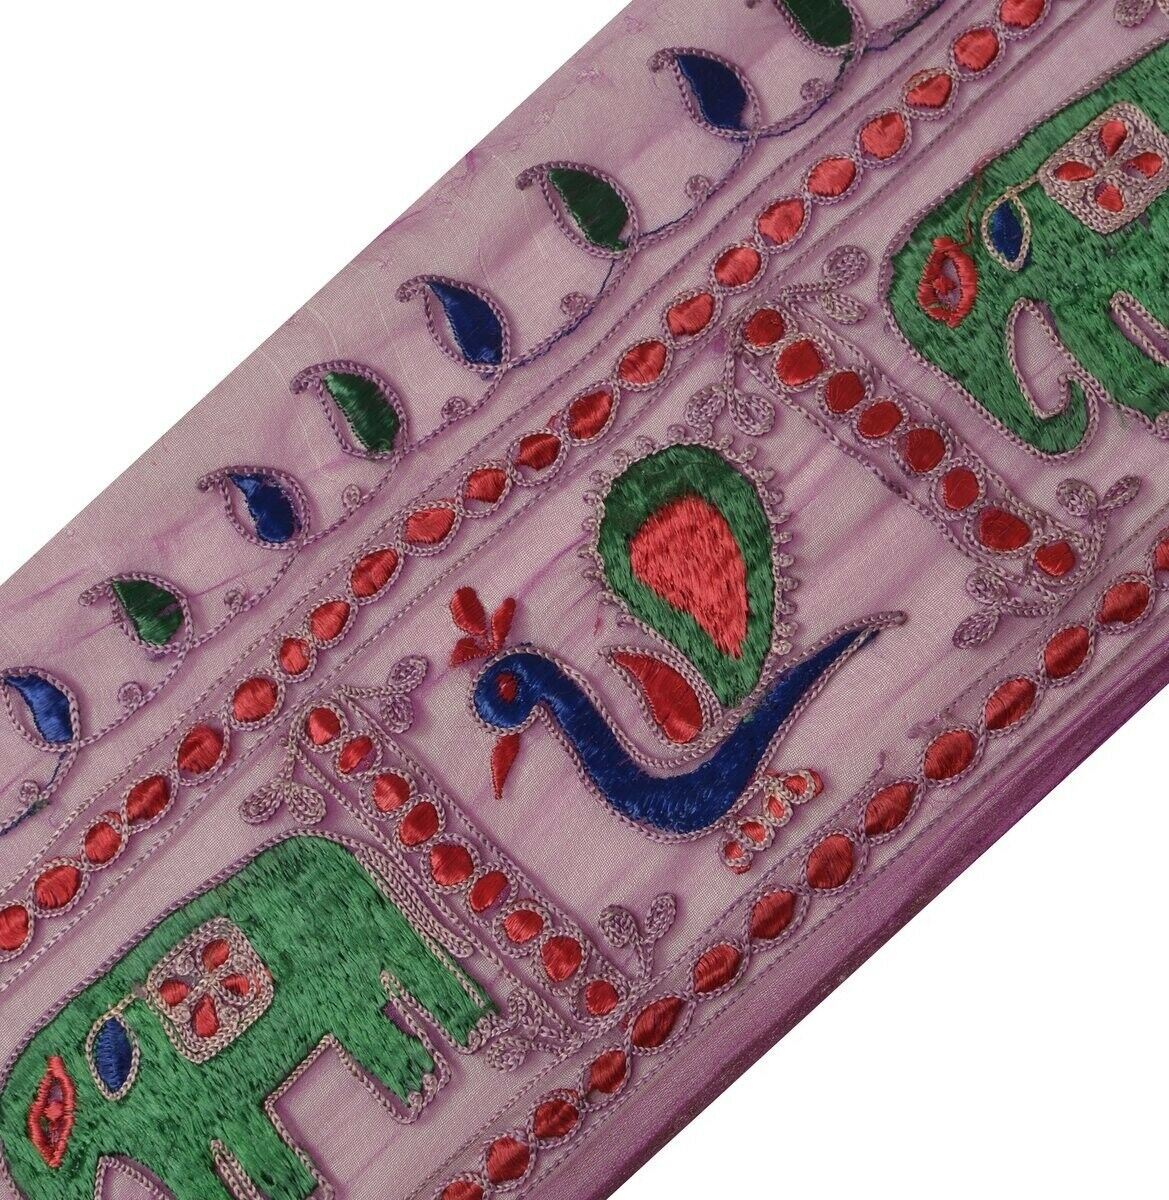 Vintage Sari Border Indian Craft Trim Peacock elephant Embroidered Lace Purple